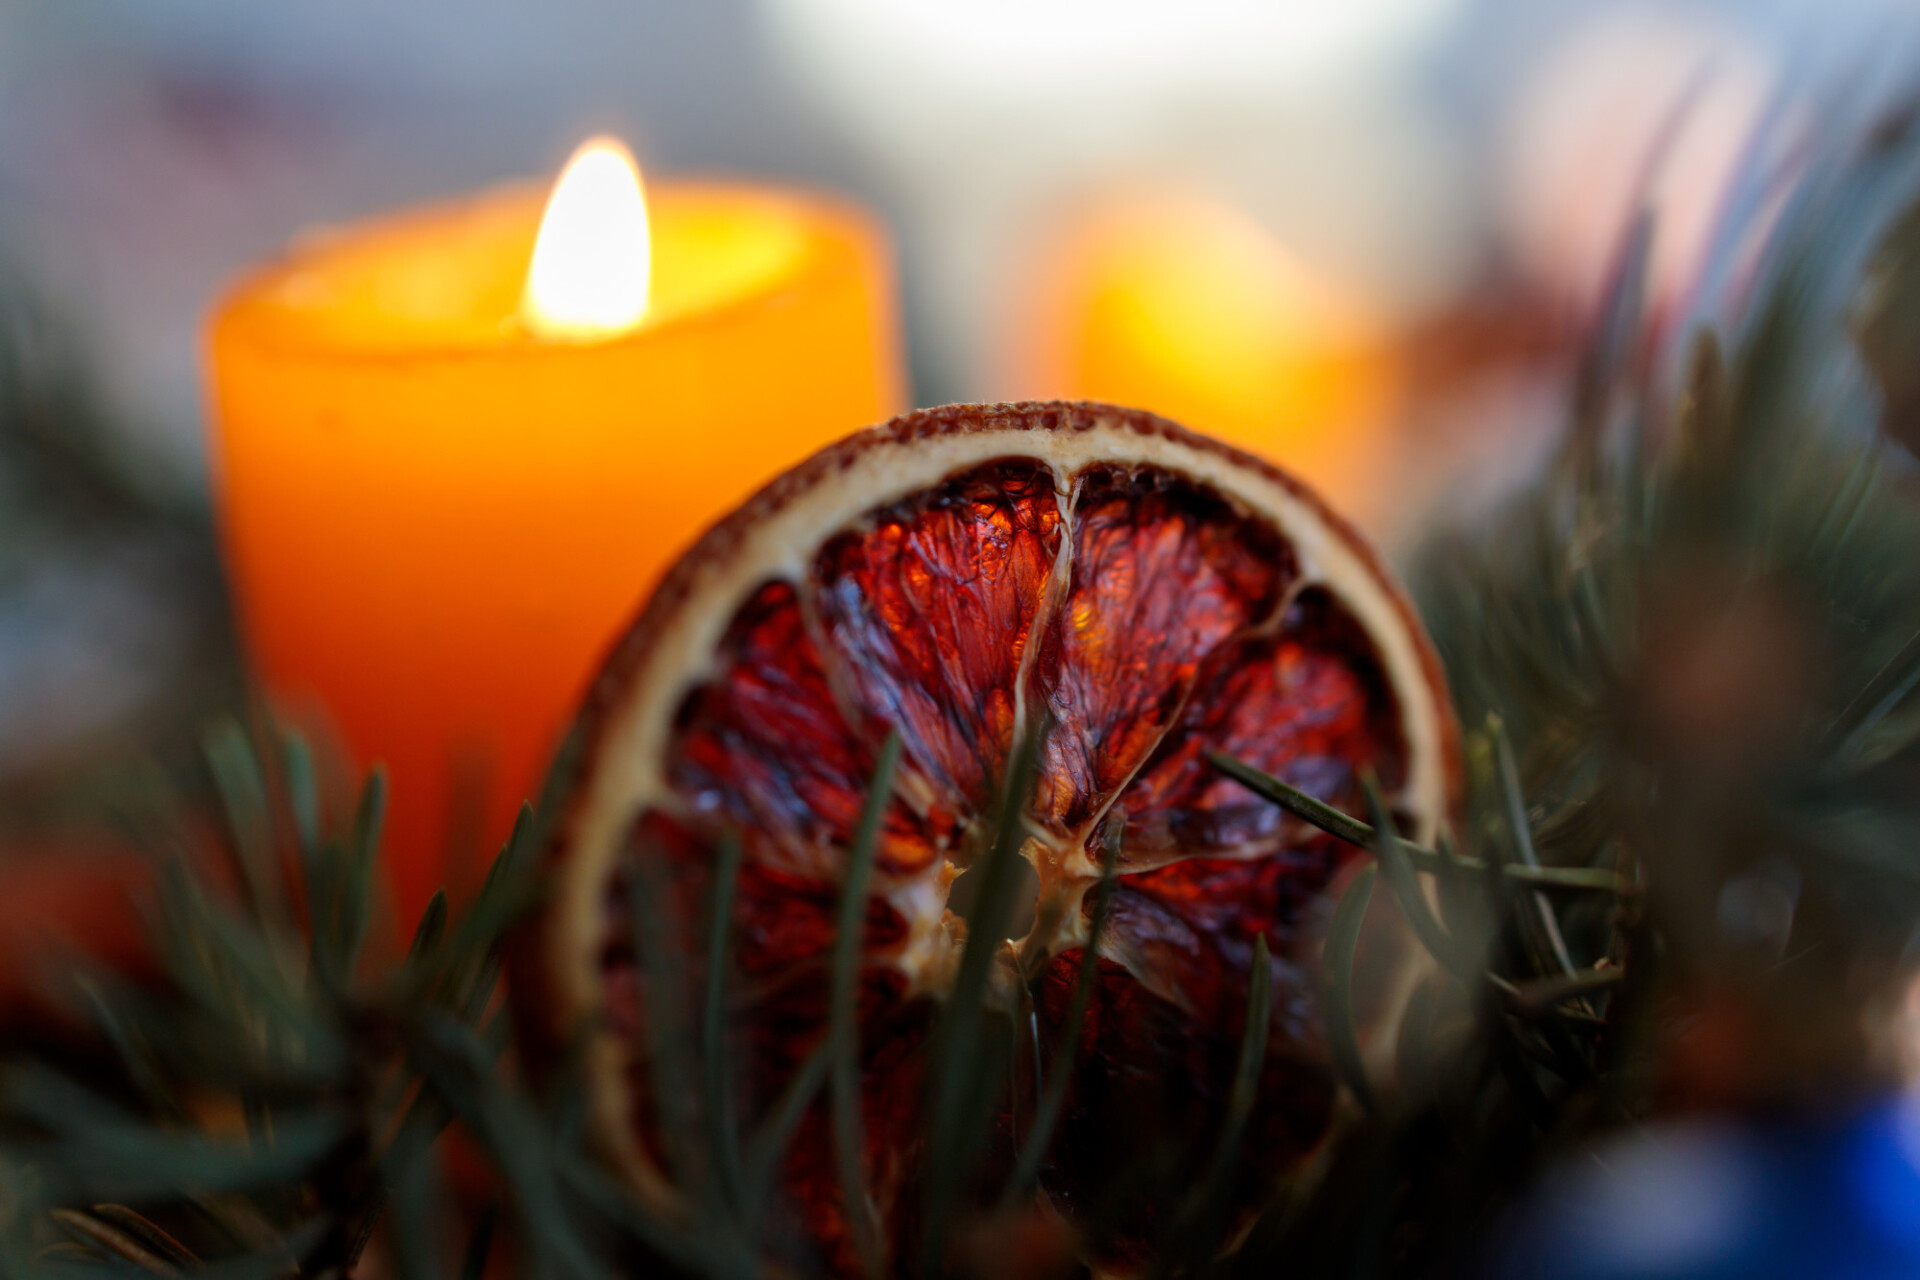 Decorated Advent wreath